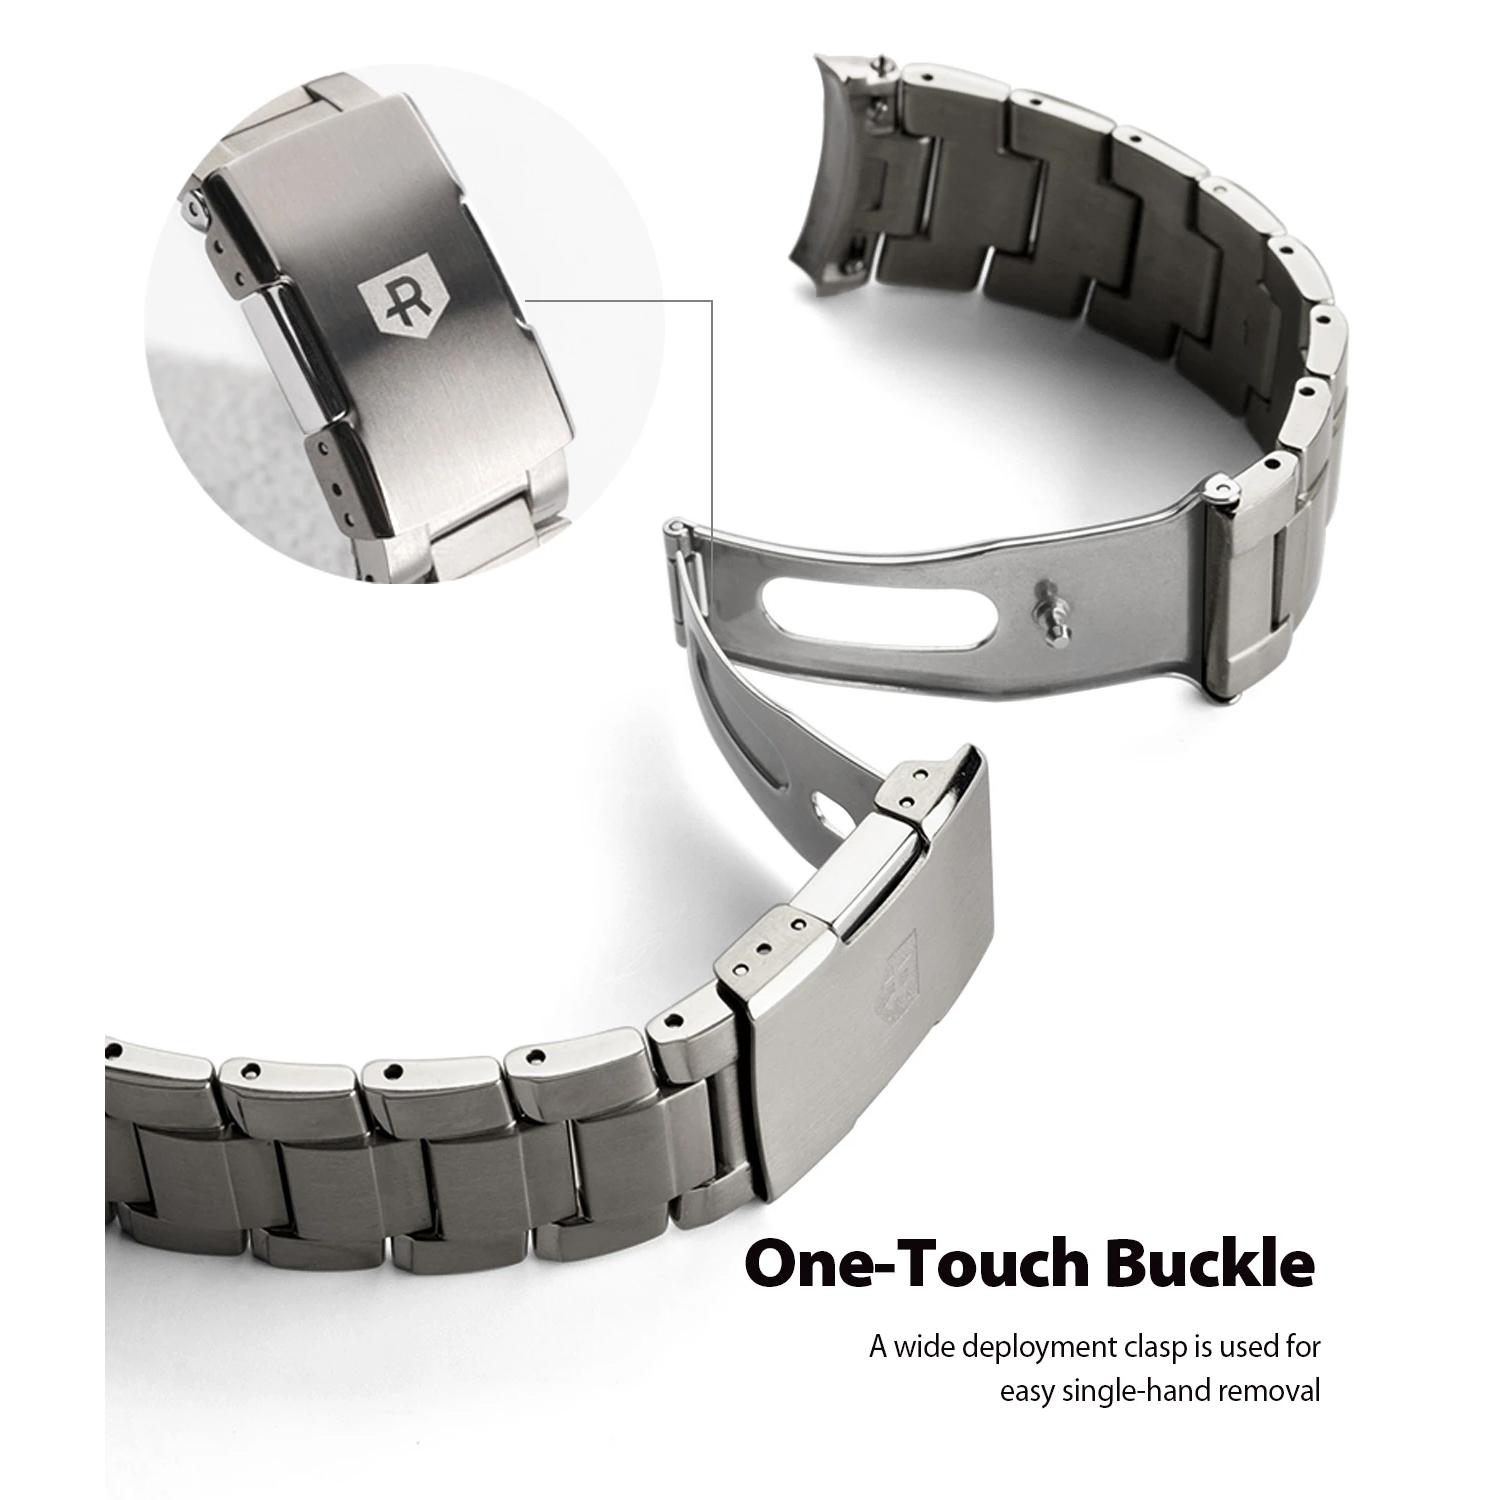 Metal One Titanium Armband Samsung Galaxy Watch Active 2 44mm Zilver